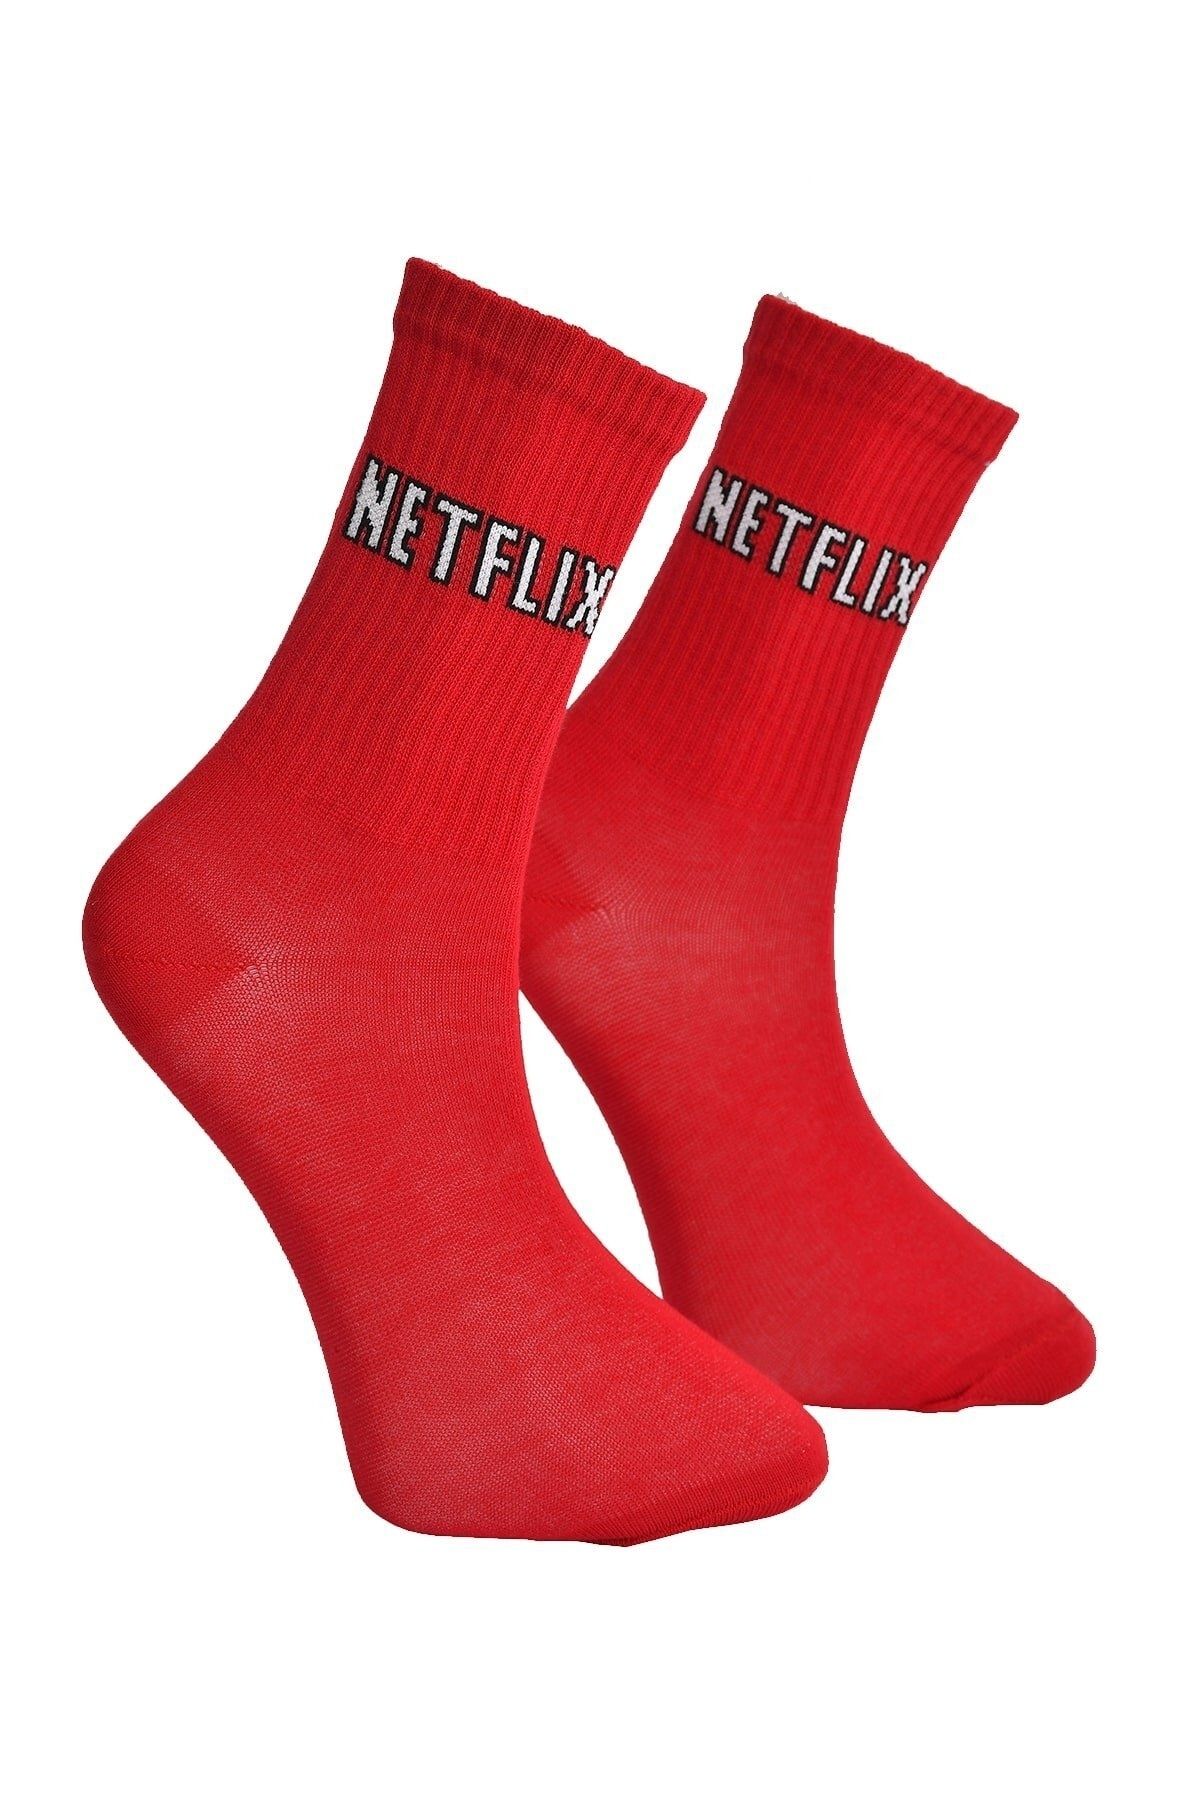 Lukas Unisex Netflix Kırmızı Çorap - Lksçrp18